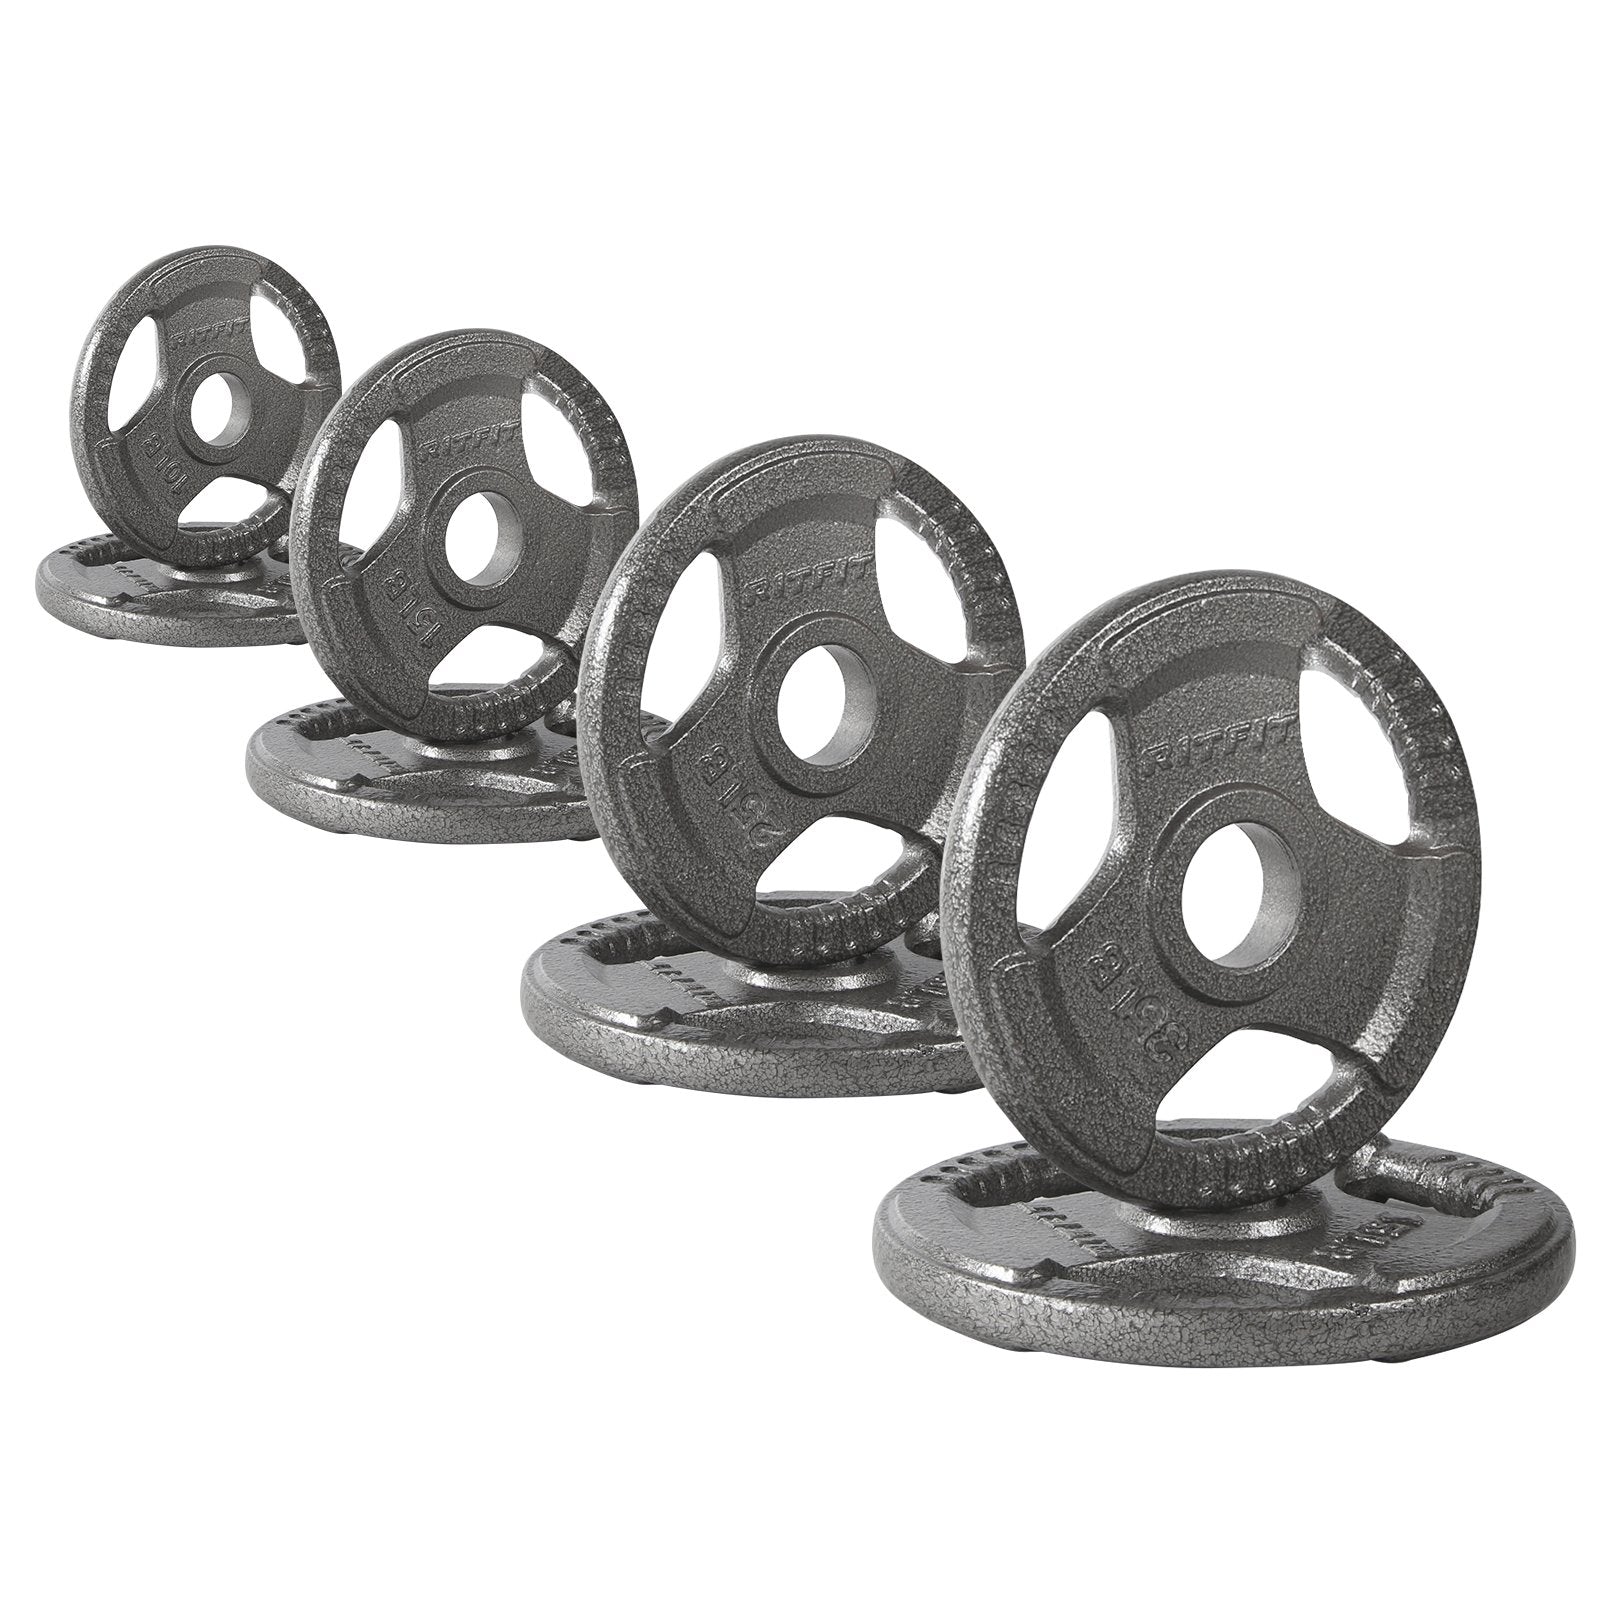 RitFit 2.5LB-55LB Cast Iron Weight Plates Set 2-Inch Olympic Grip Plates for Sale 170LB Set